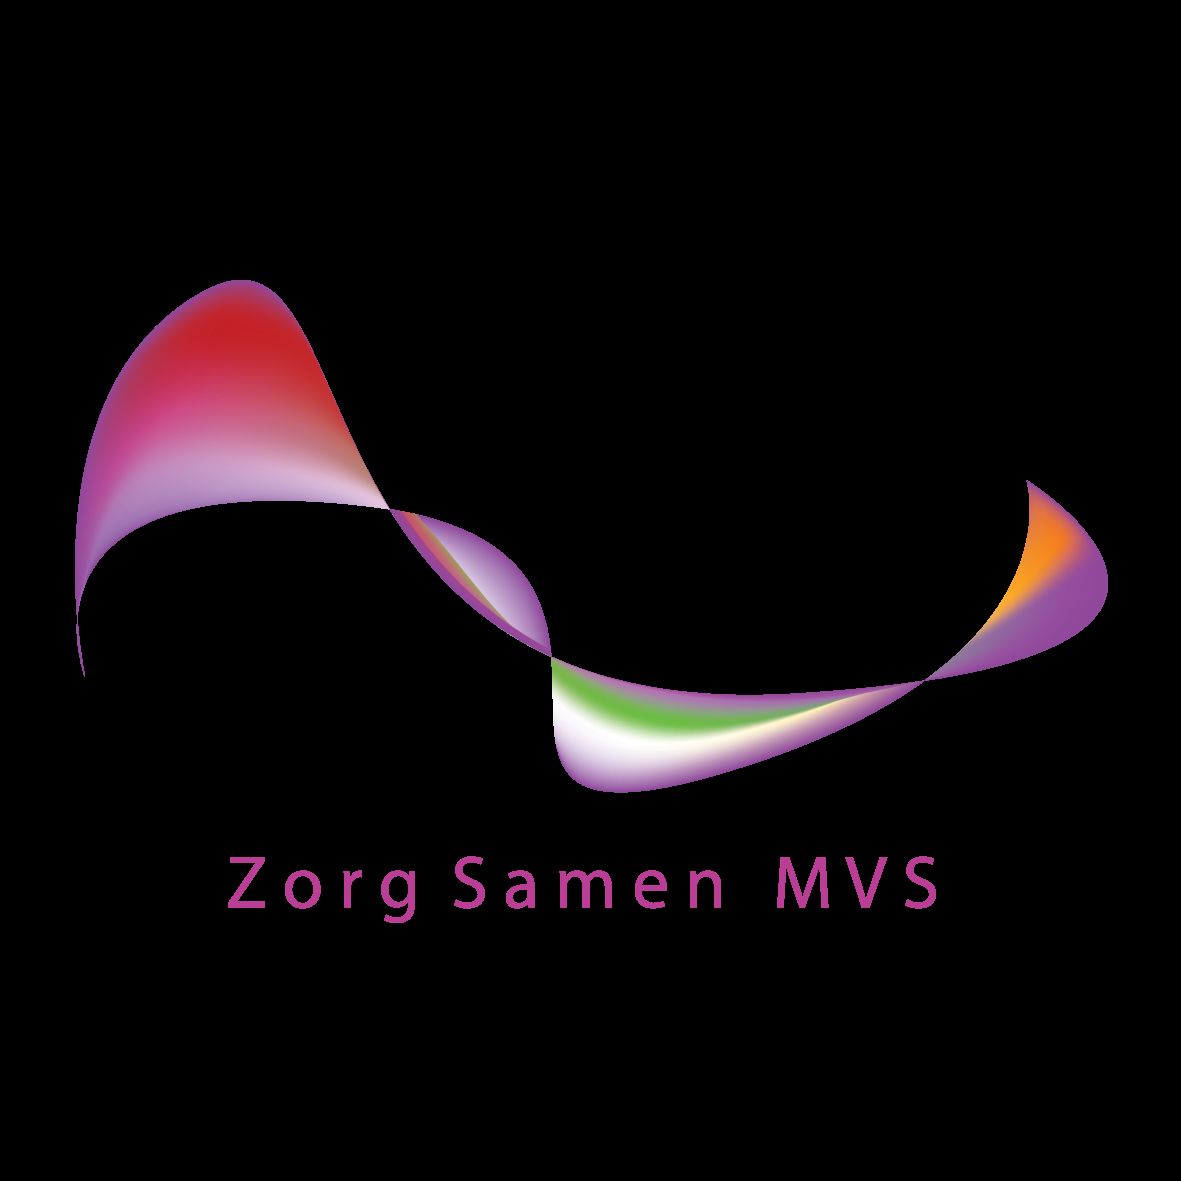 Manager ZorgSamen MVS